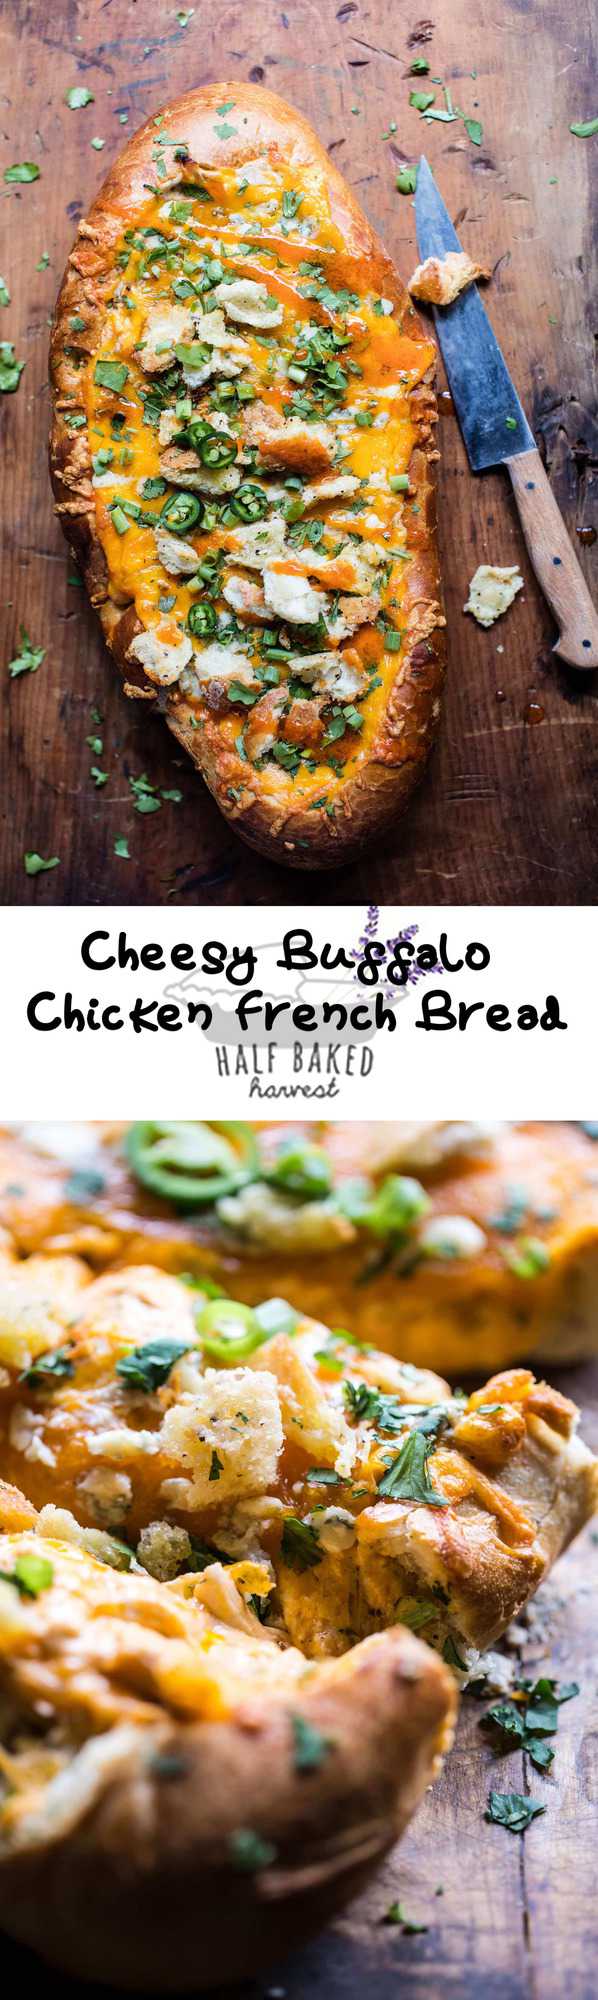 Cheesy Buffalo Chicken French Bread | halfbakedharvest.com @hbharvest